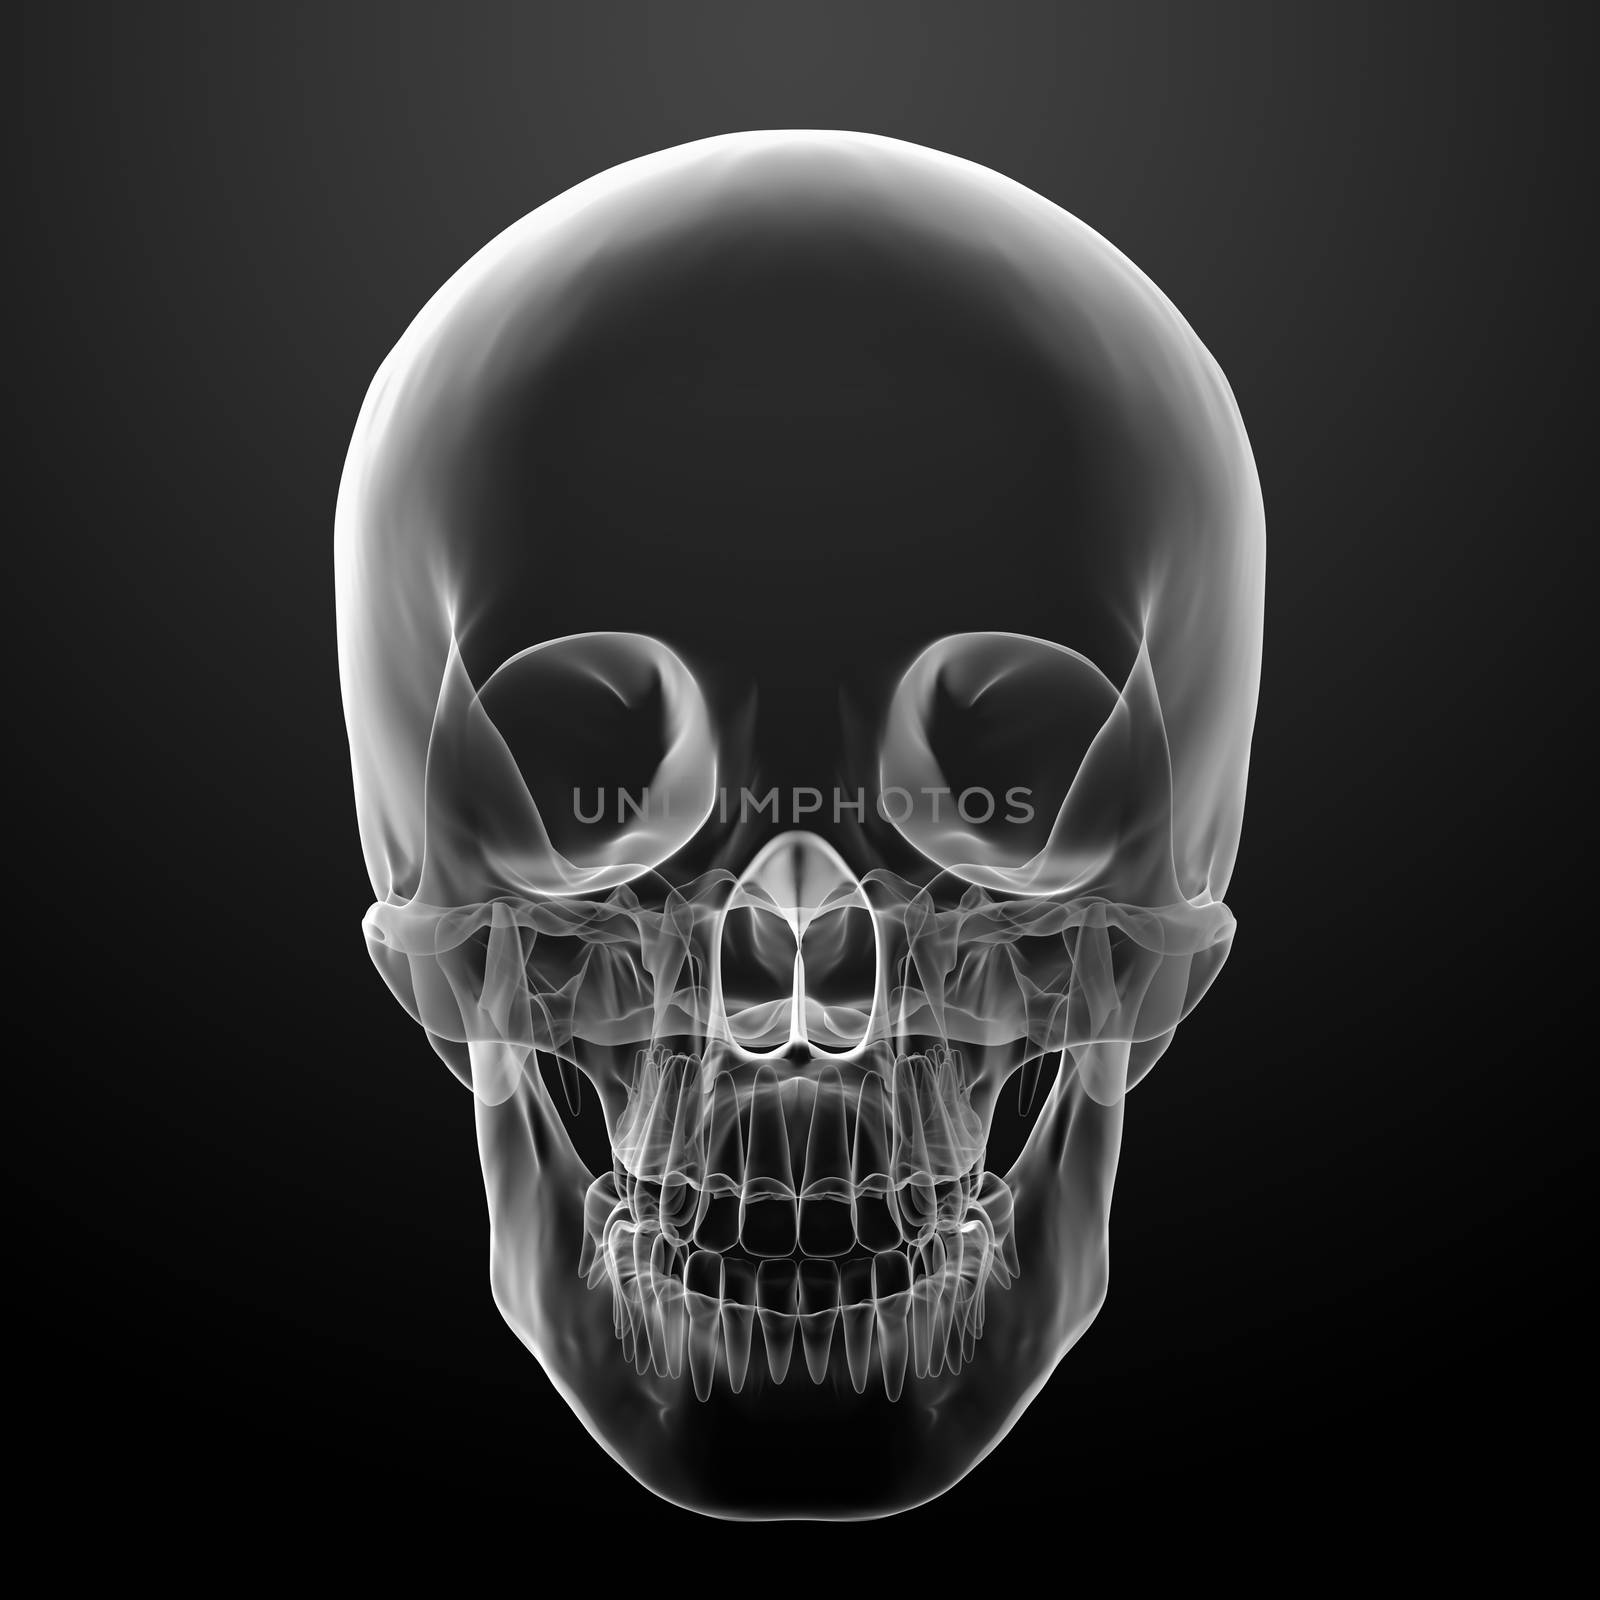 3d render skull on black background - front view